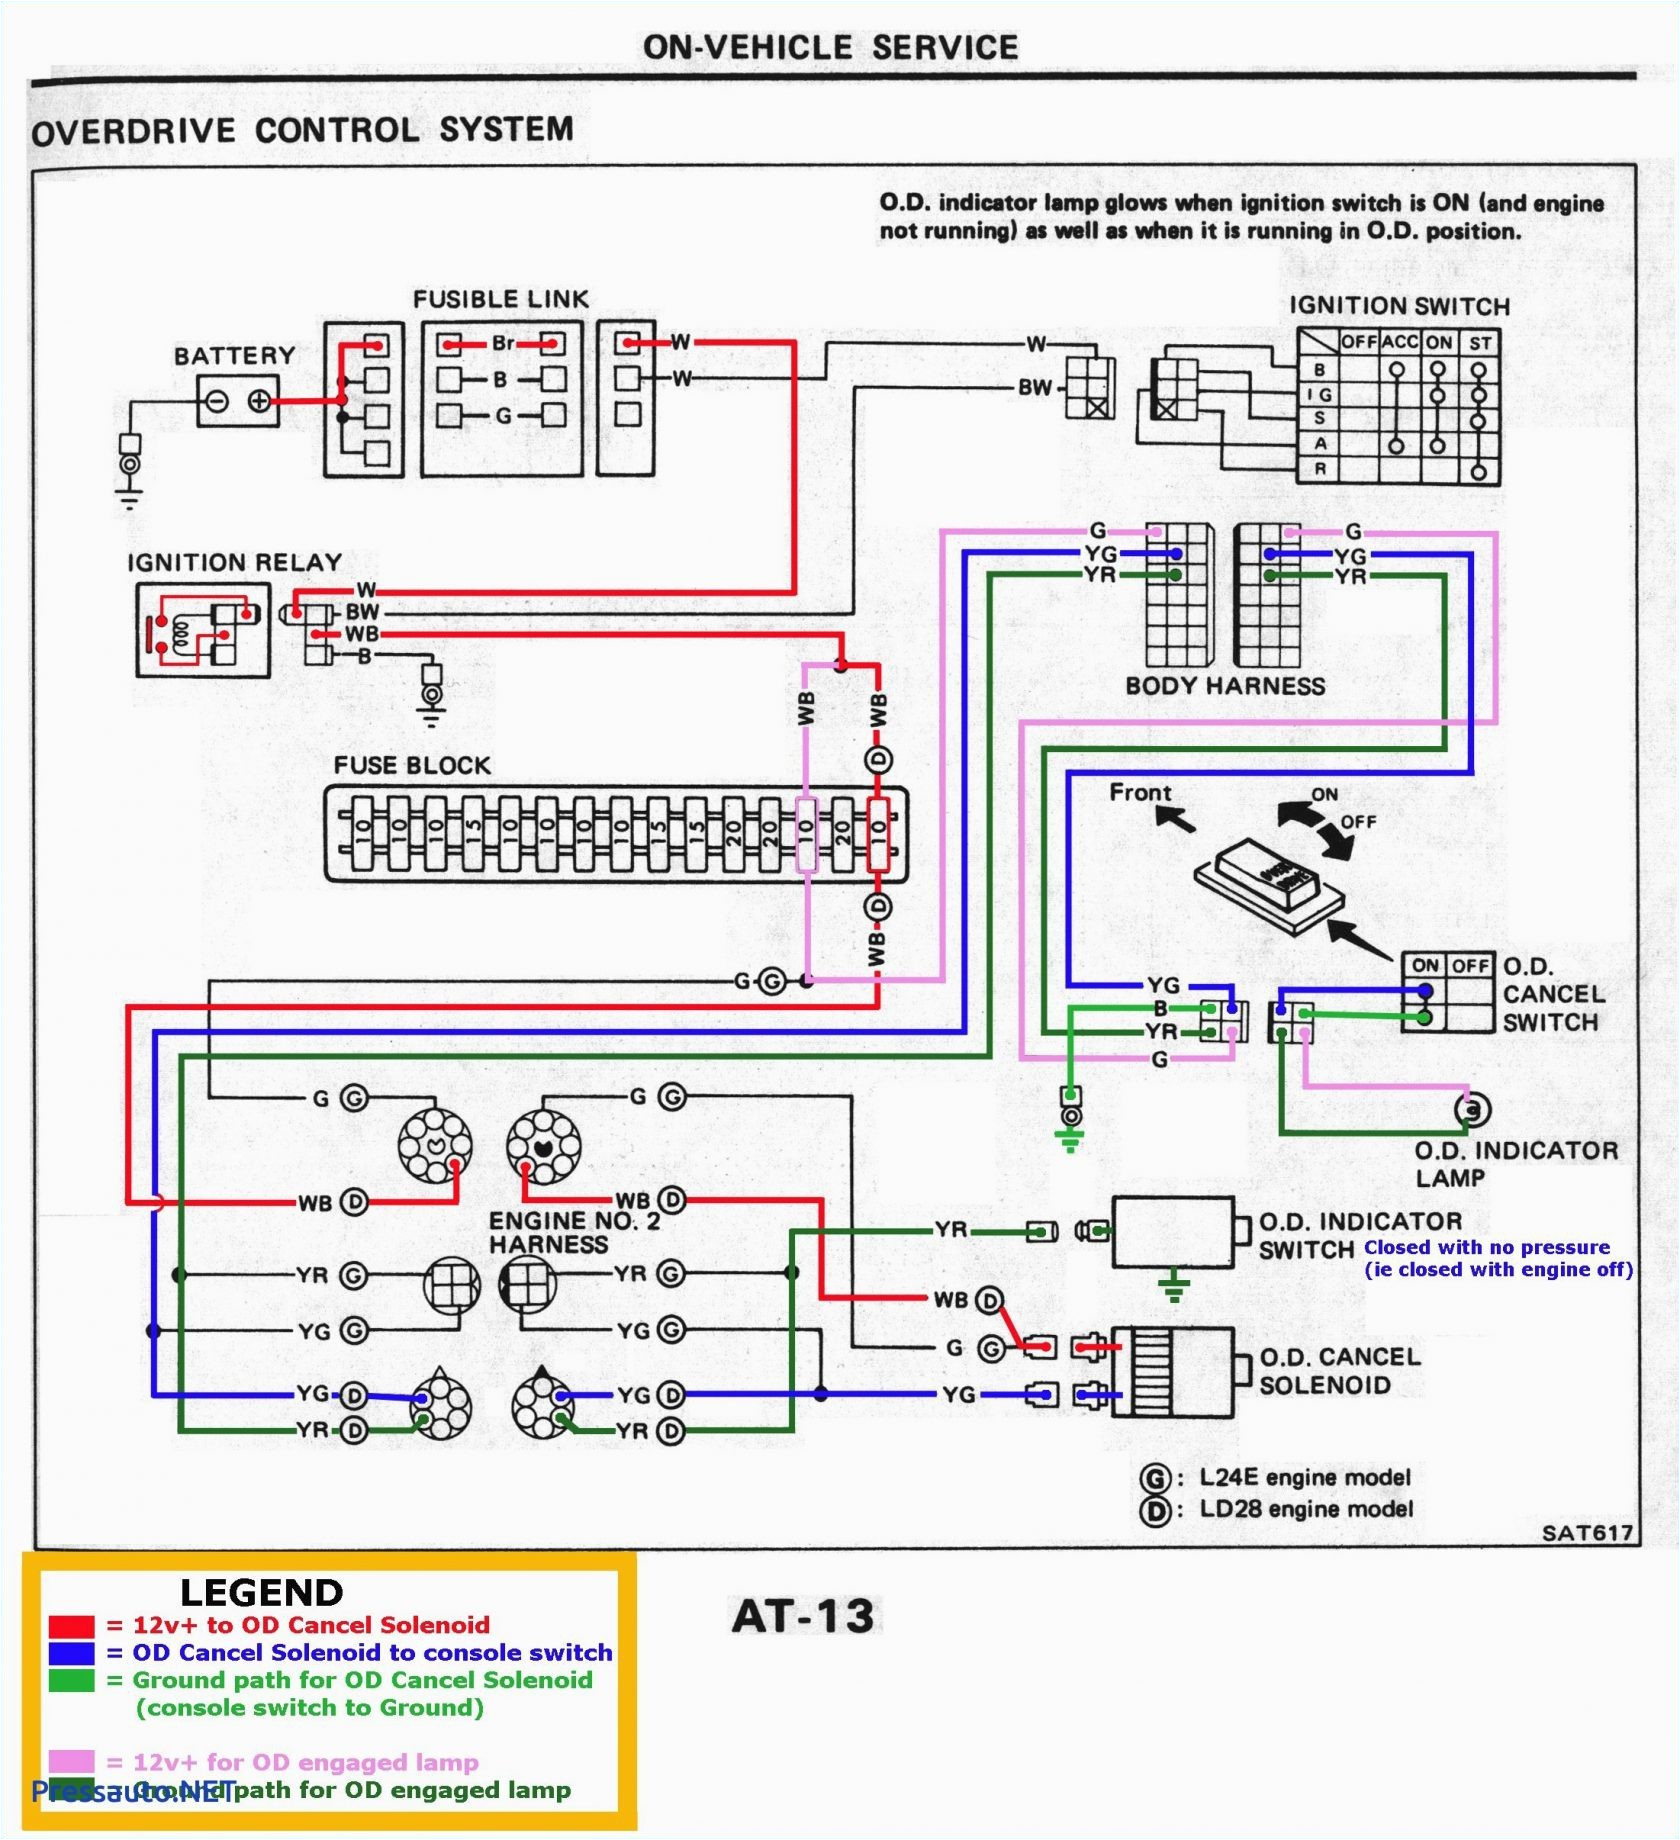 Craftsman Wiring Diagram Craftsman 358 794742 Wiring Diagram Wiring Diagram Expert